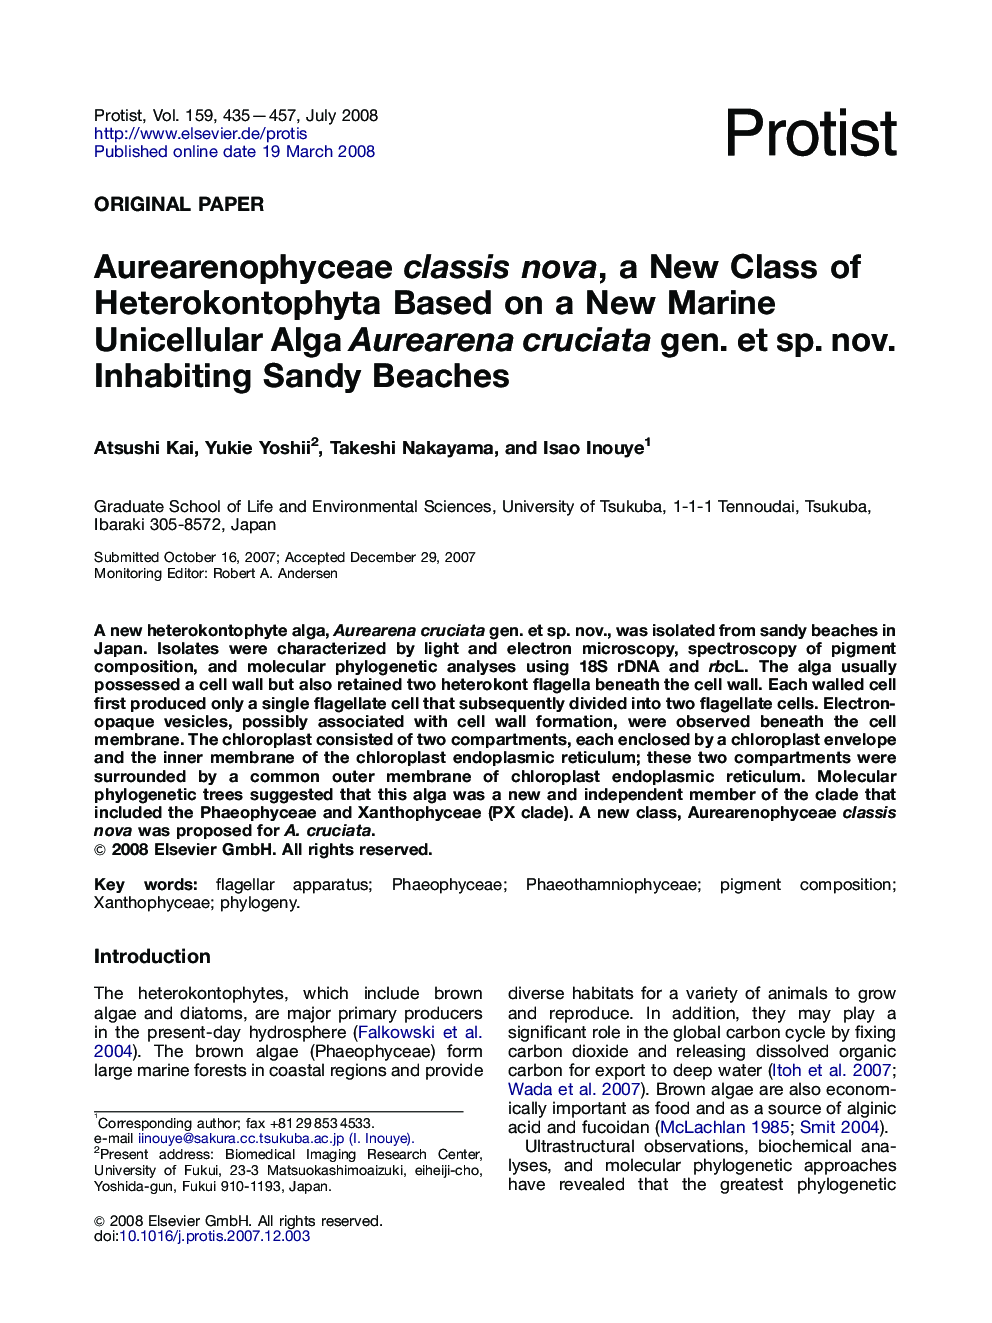 Aurearenophyceae classis nova, a New Class of Heterokontophyta Based on a New Marine Unicellular Alga Aurearena cruciata gen. et sp. nov. Inhabiting Sandy Beaches